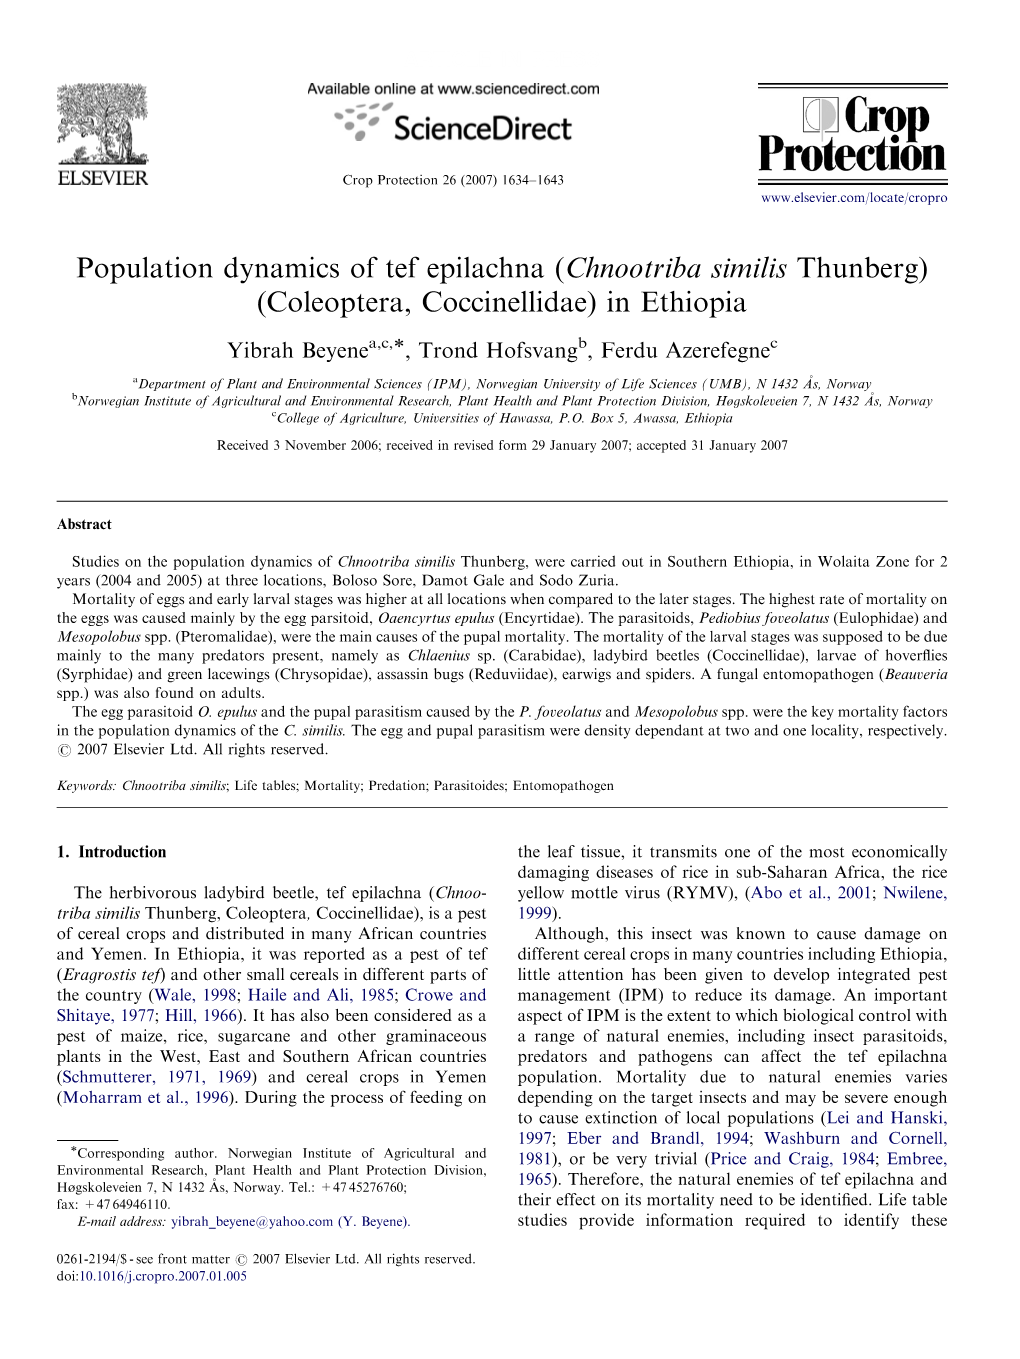 Population Dynamics of Tef Epilachna (Chnootriba Similis Thunberg) (Coleoptera, Coccinellidae) in Ethiopia